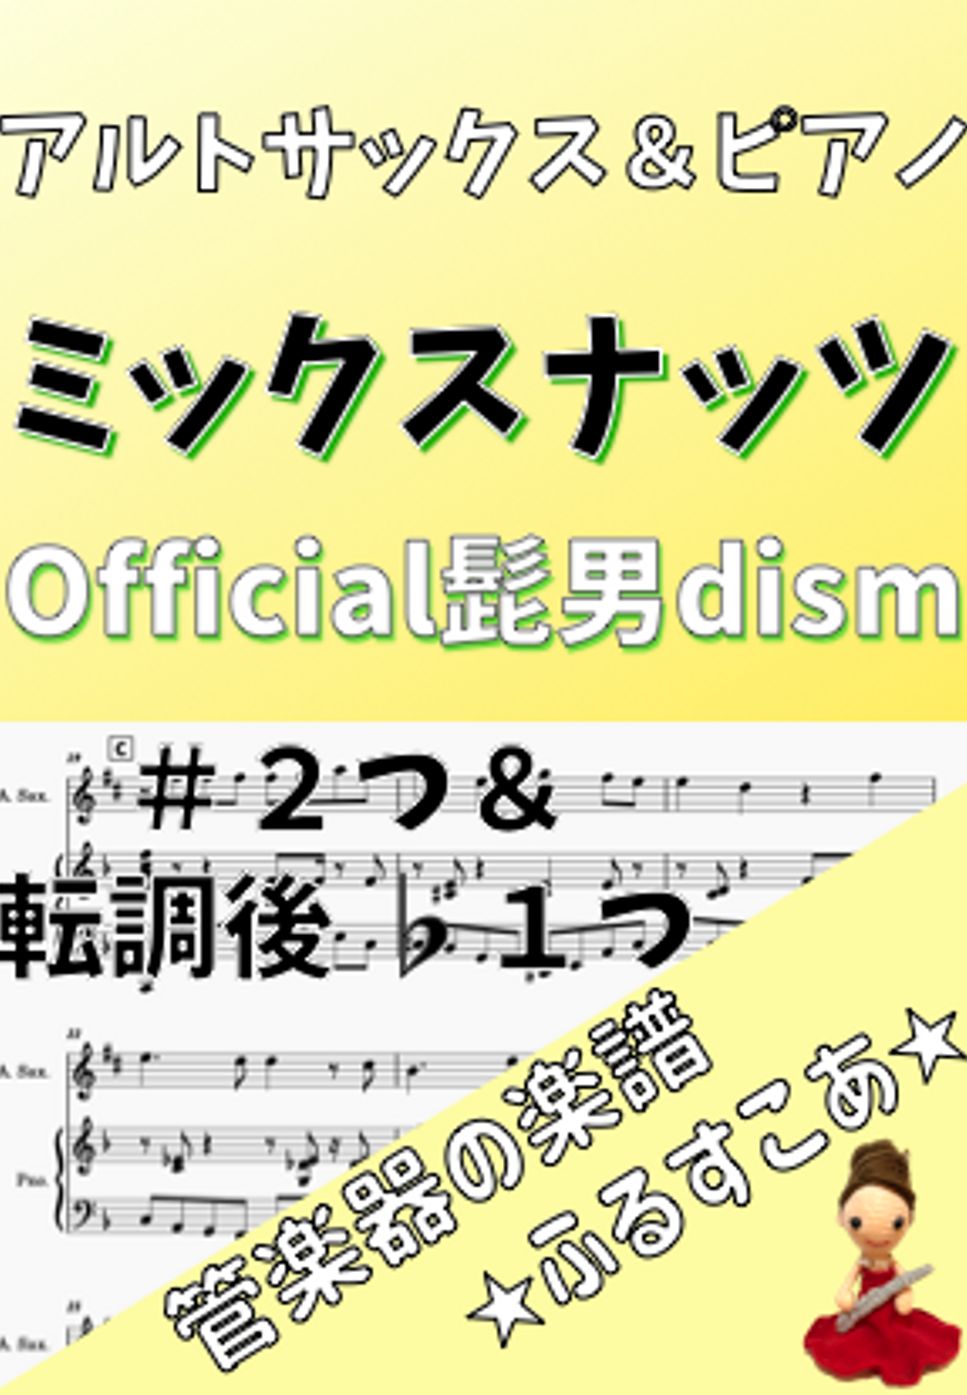 Official髭男dism - 【アルトサックス＆ピアノ】#2♭1ミックスナッツ（Official髭男dism） by 管楽器の楽譜★ふるすこあ